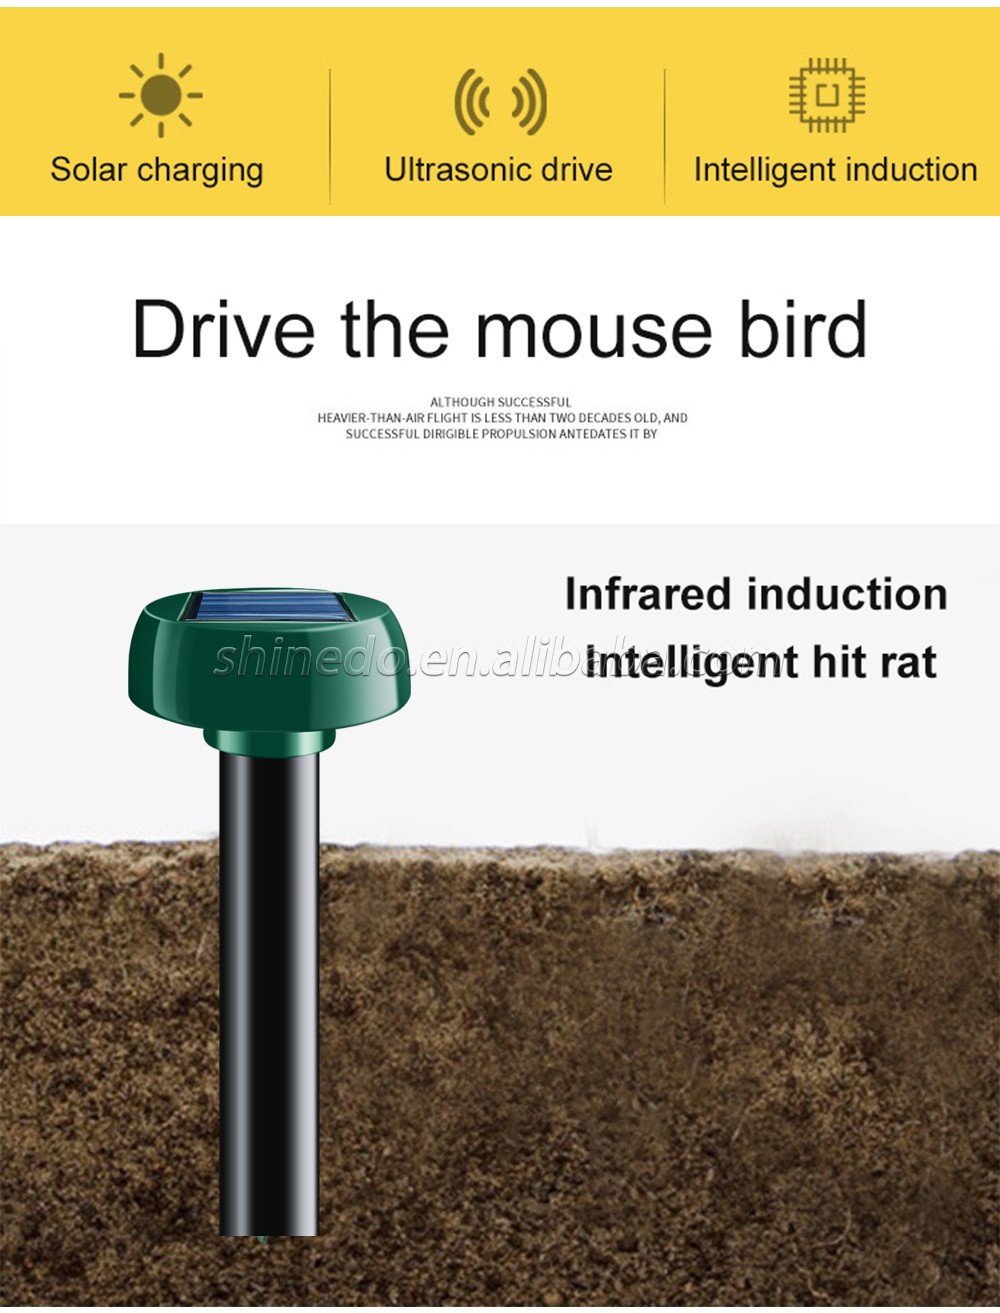 Solar Mole Repellent Ultrasonic Groundhog Repeller Snake Rodent Gopher Spikes Chaser Pest Control for Lawn Garden